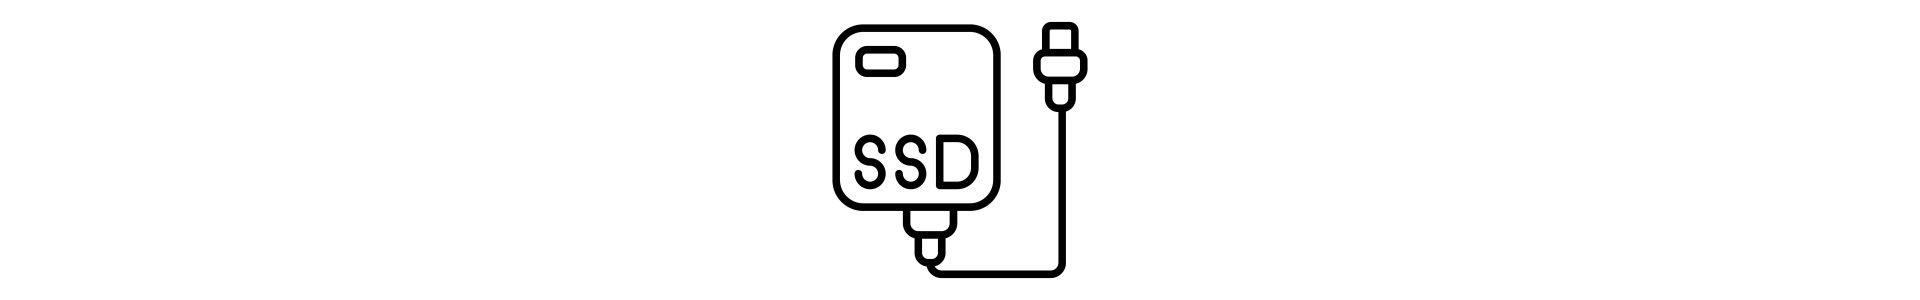 Externe SSD